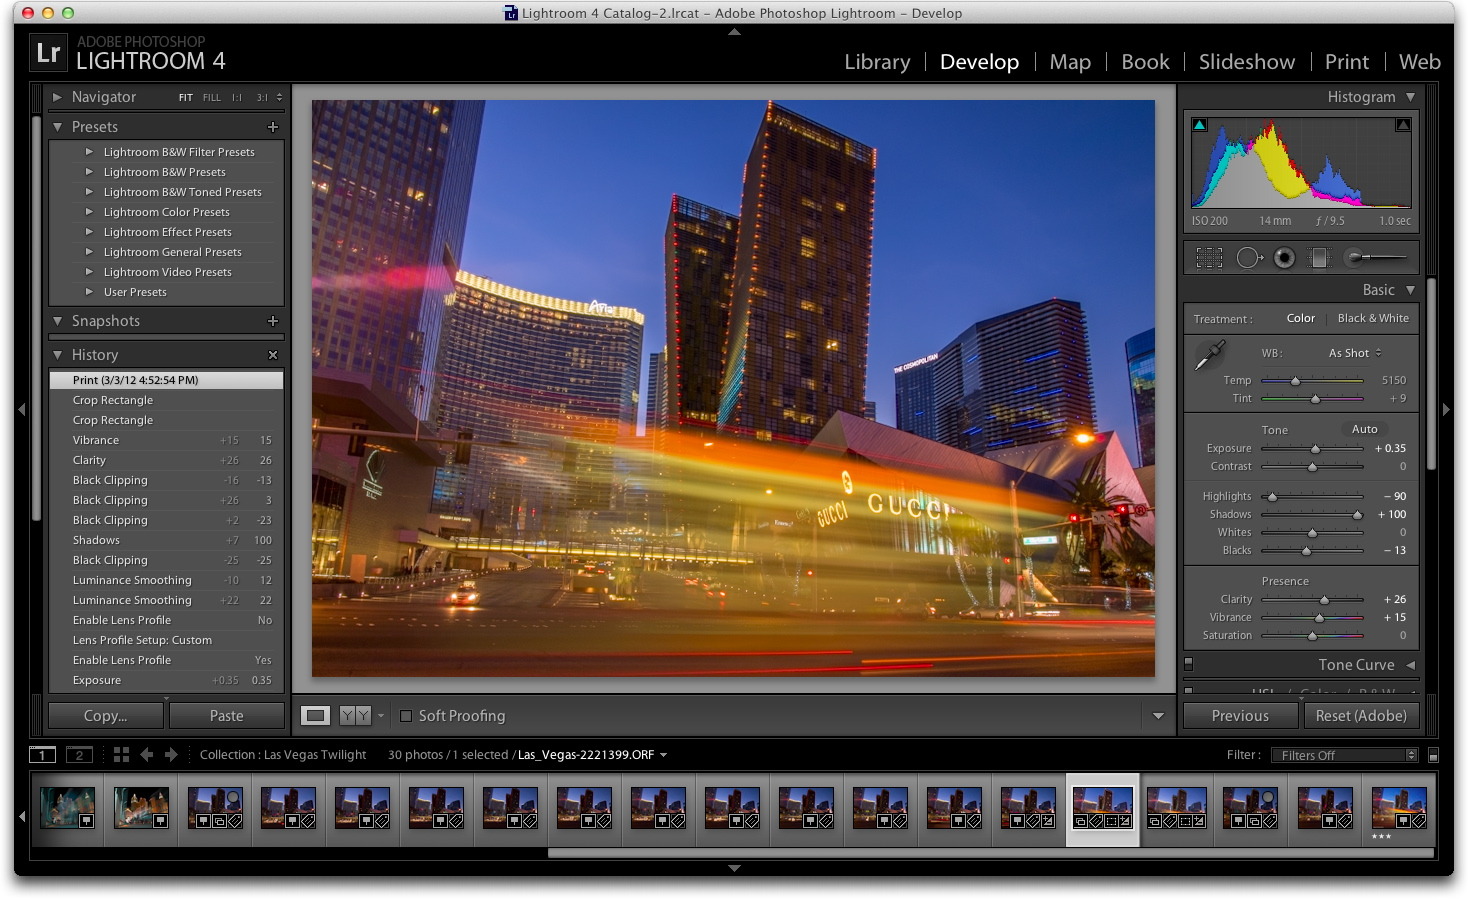 Adobe Photoshop Lightroom 3 Software For Mac